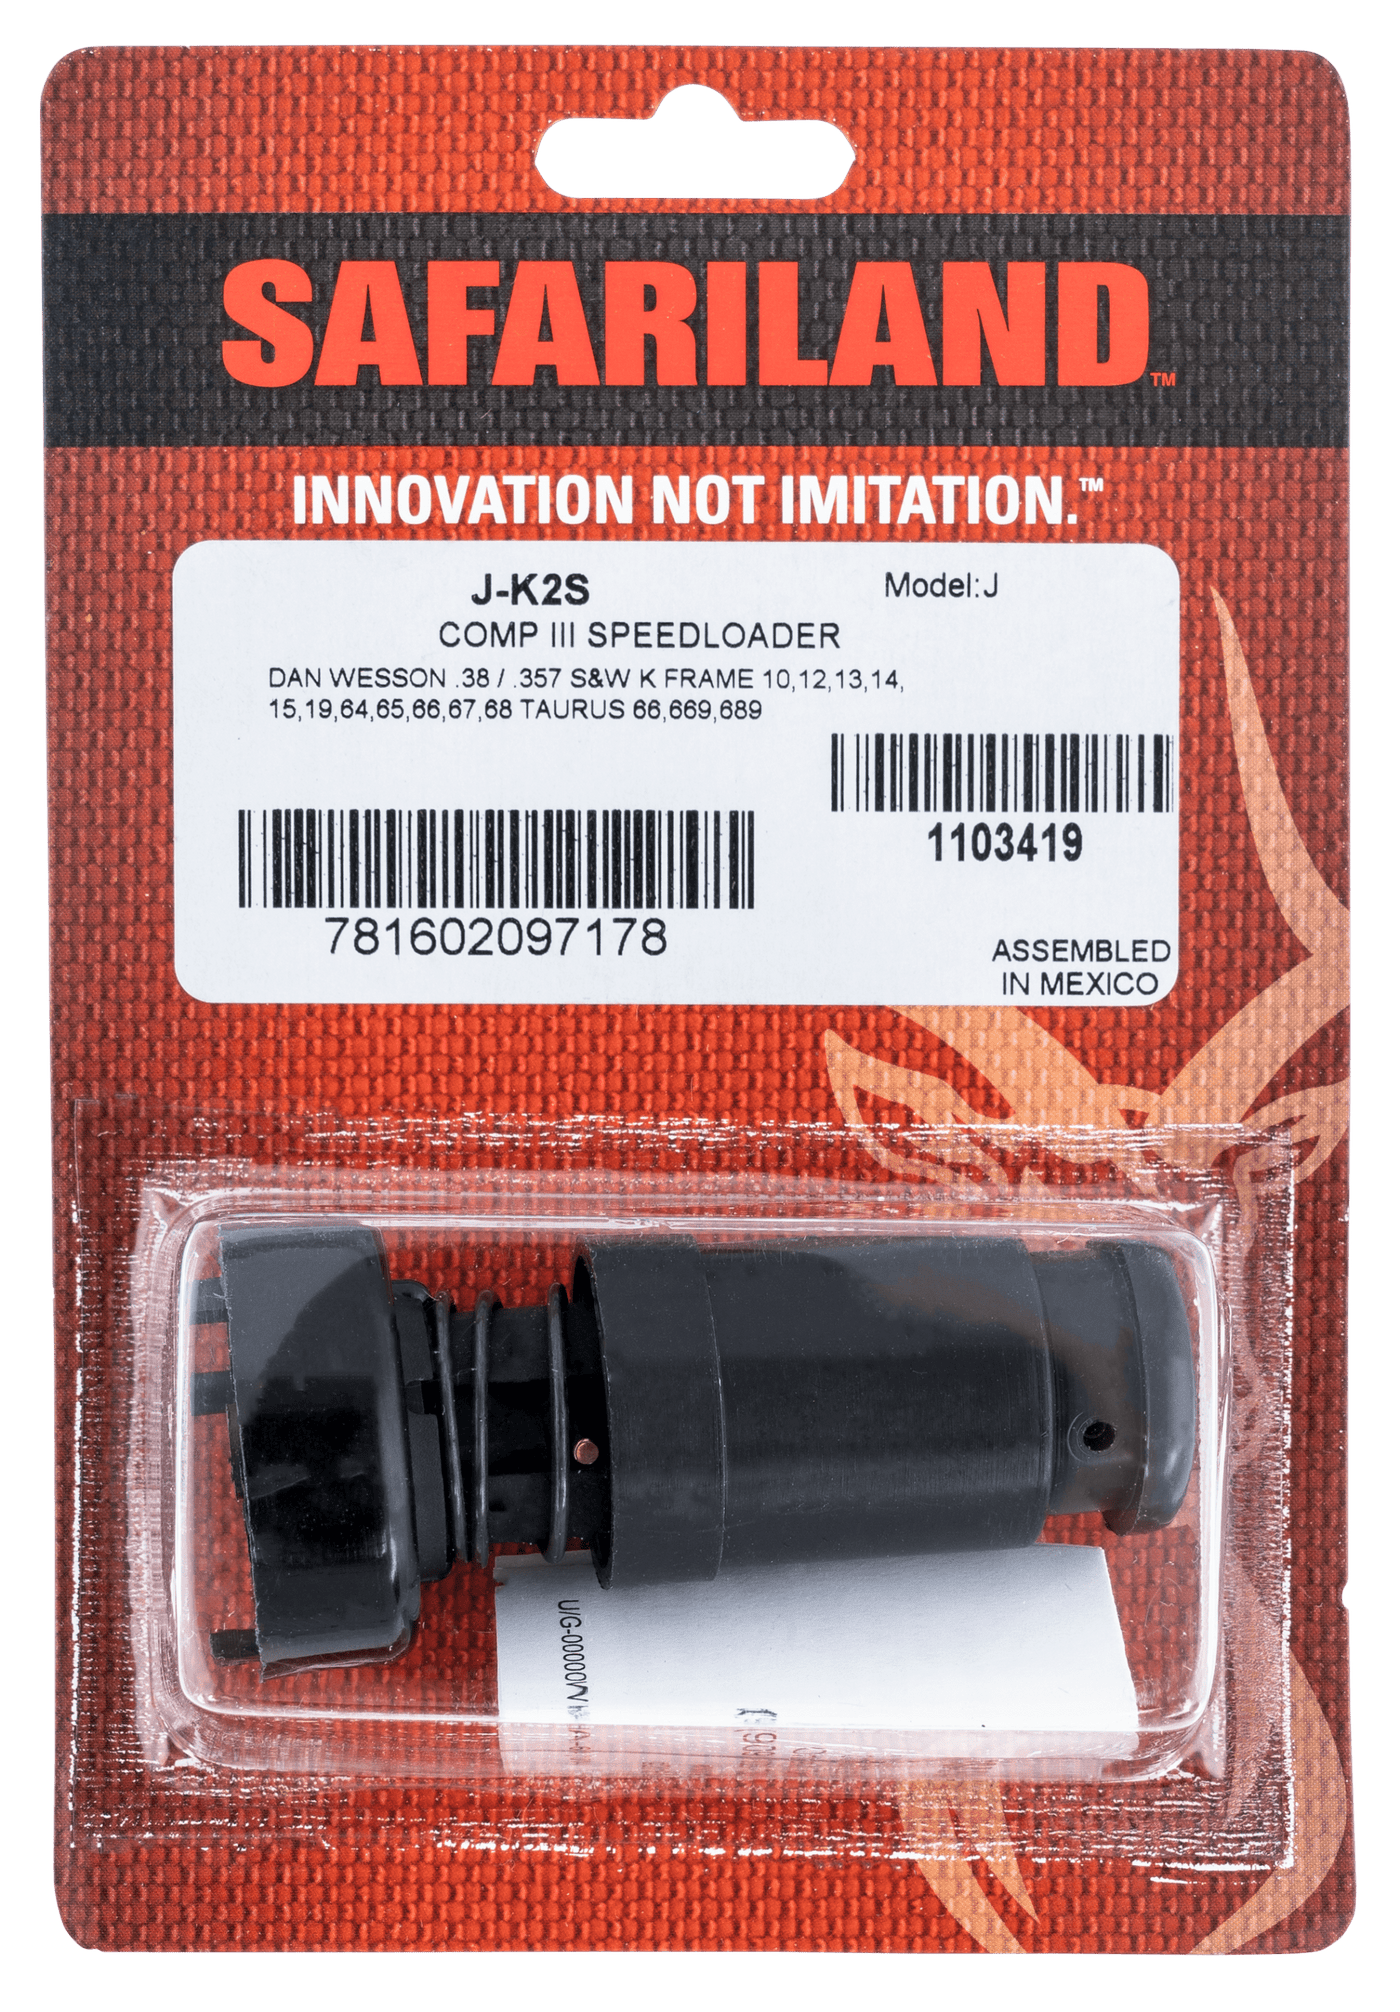 Safariland Sl J-k2s Comp Iii Spd Ldr S&w K-frm Firearm Accessories